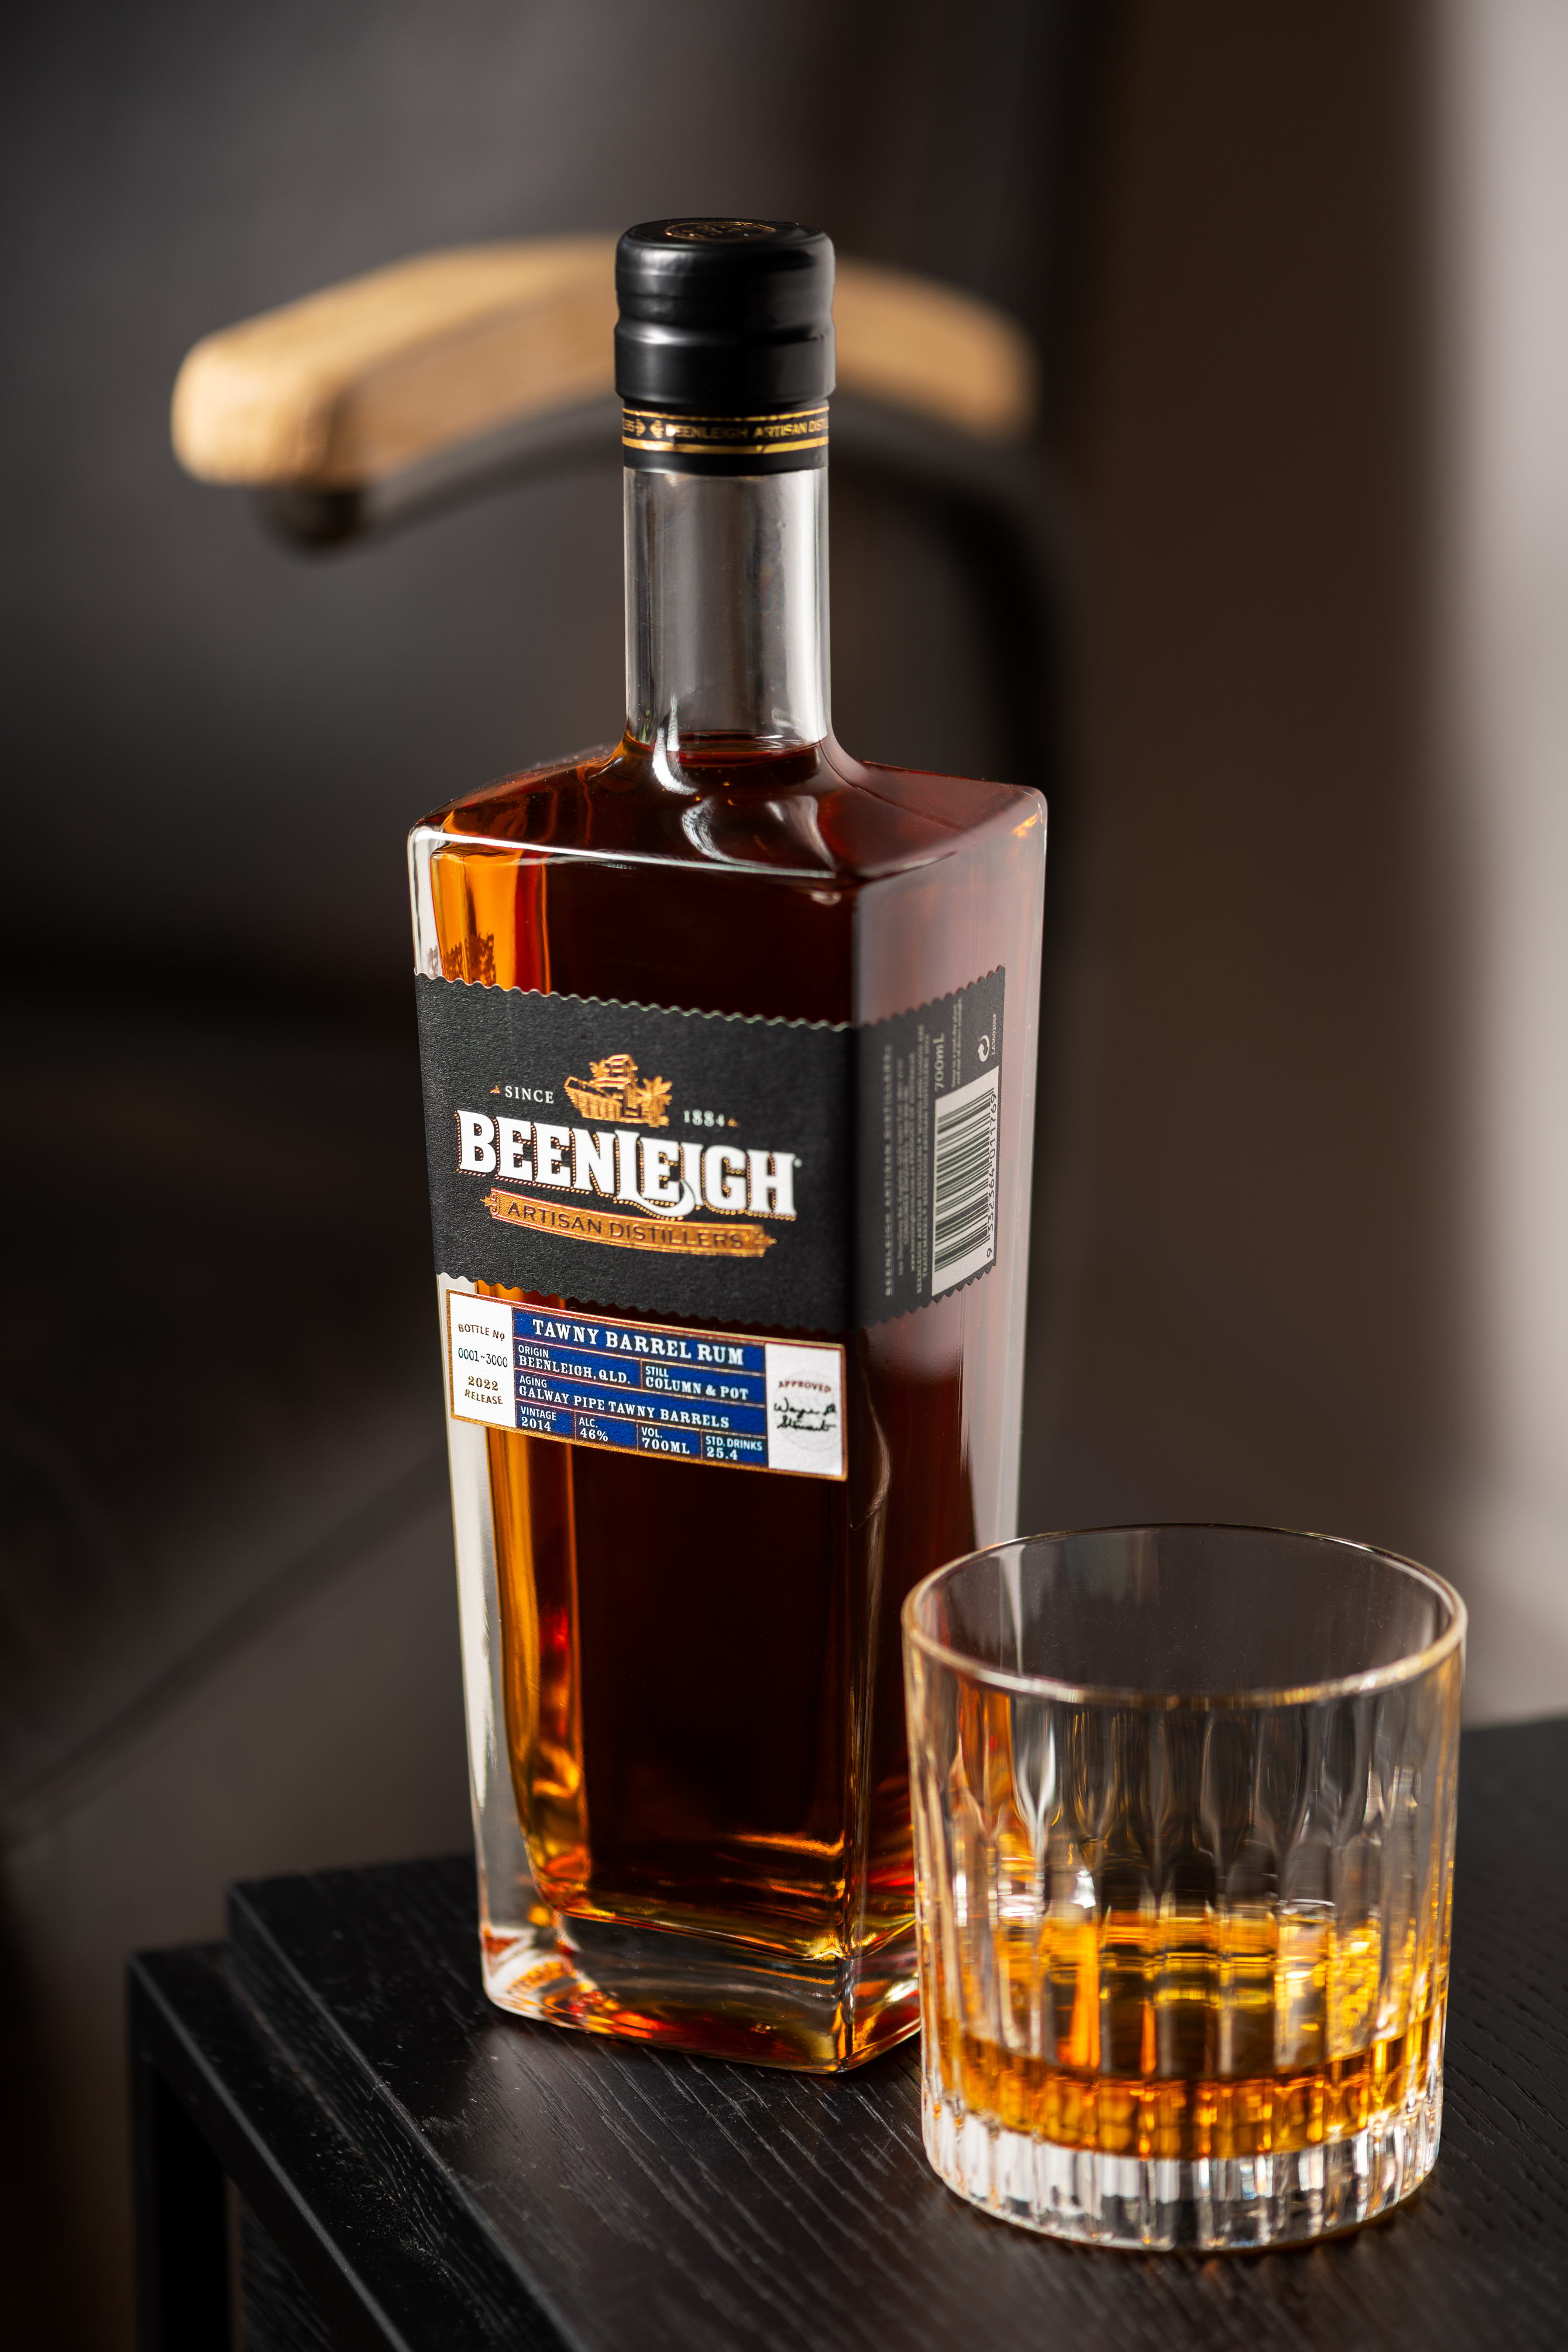 Beenleigh Tawny Barrel Rum 46% 0,7l